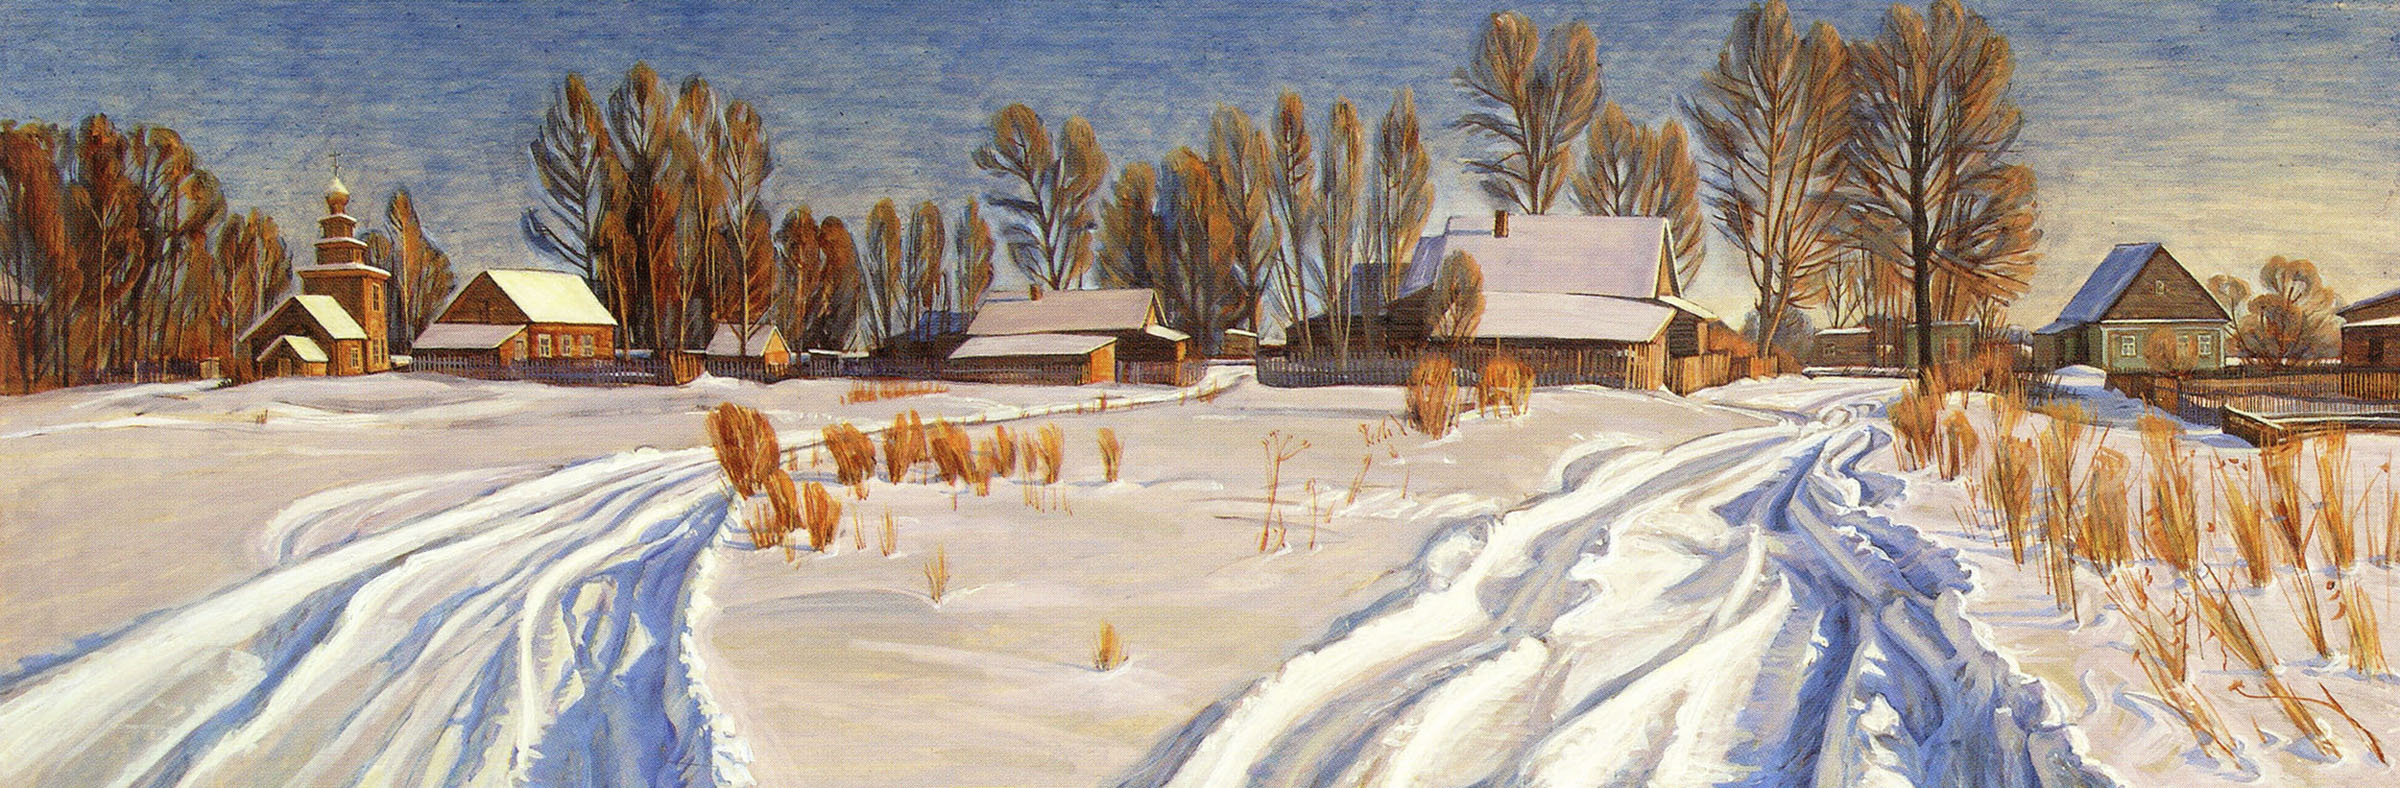 Е. Кошевая. Зима в деревне. 2001.